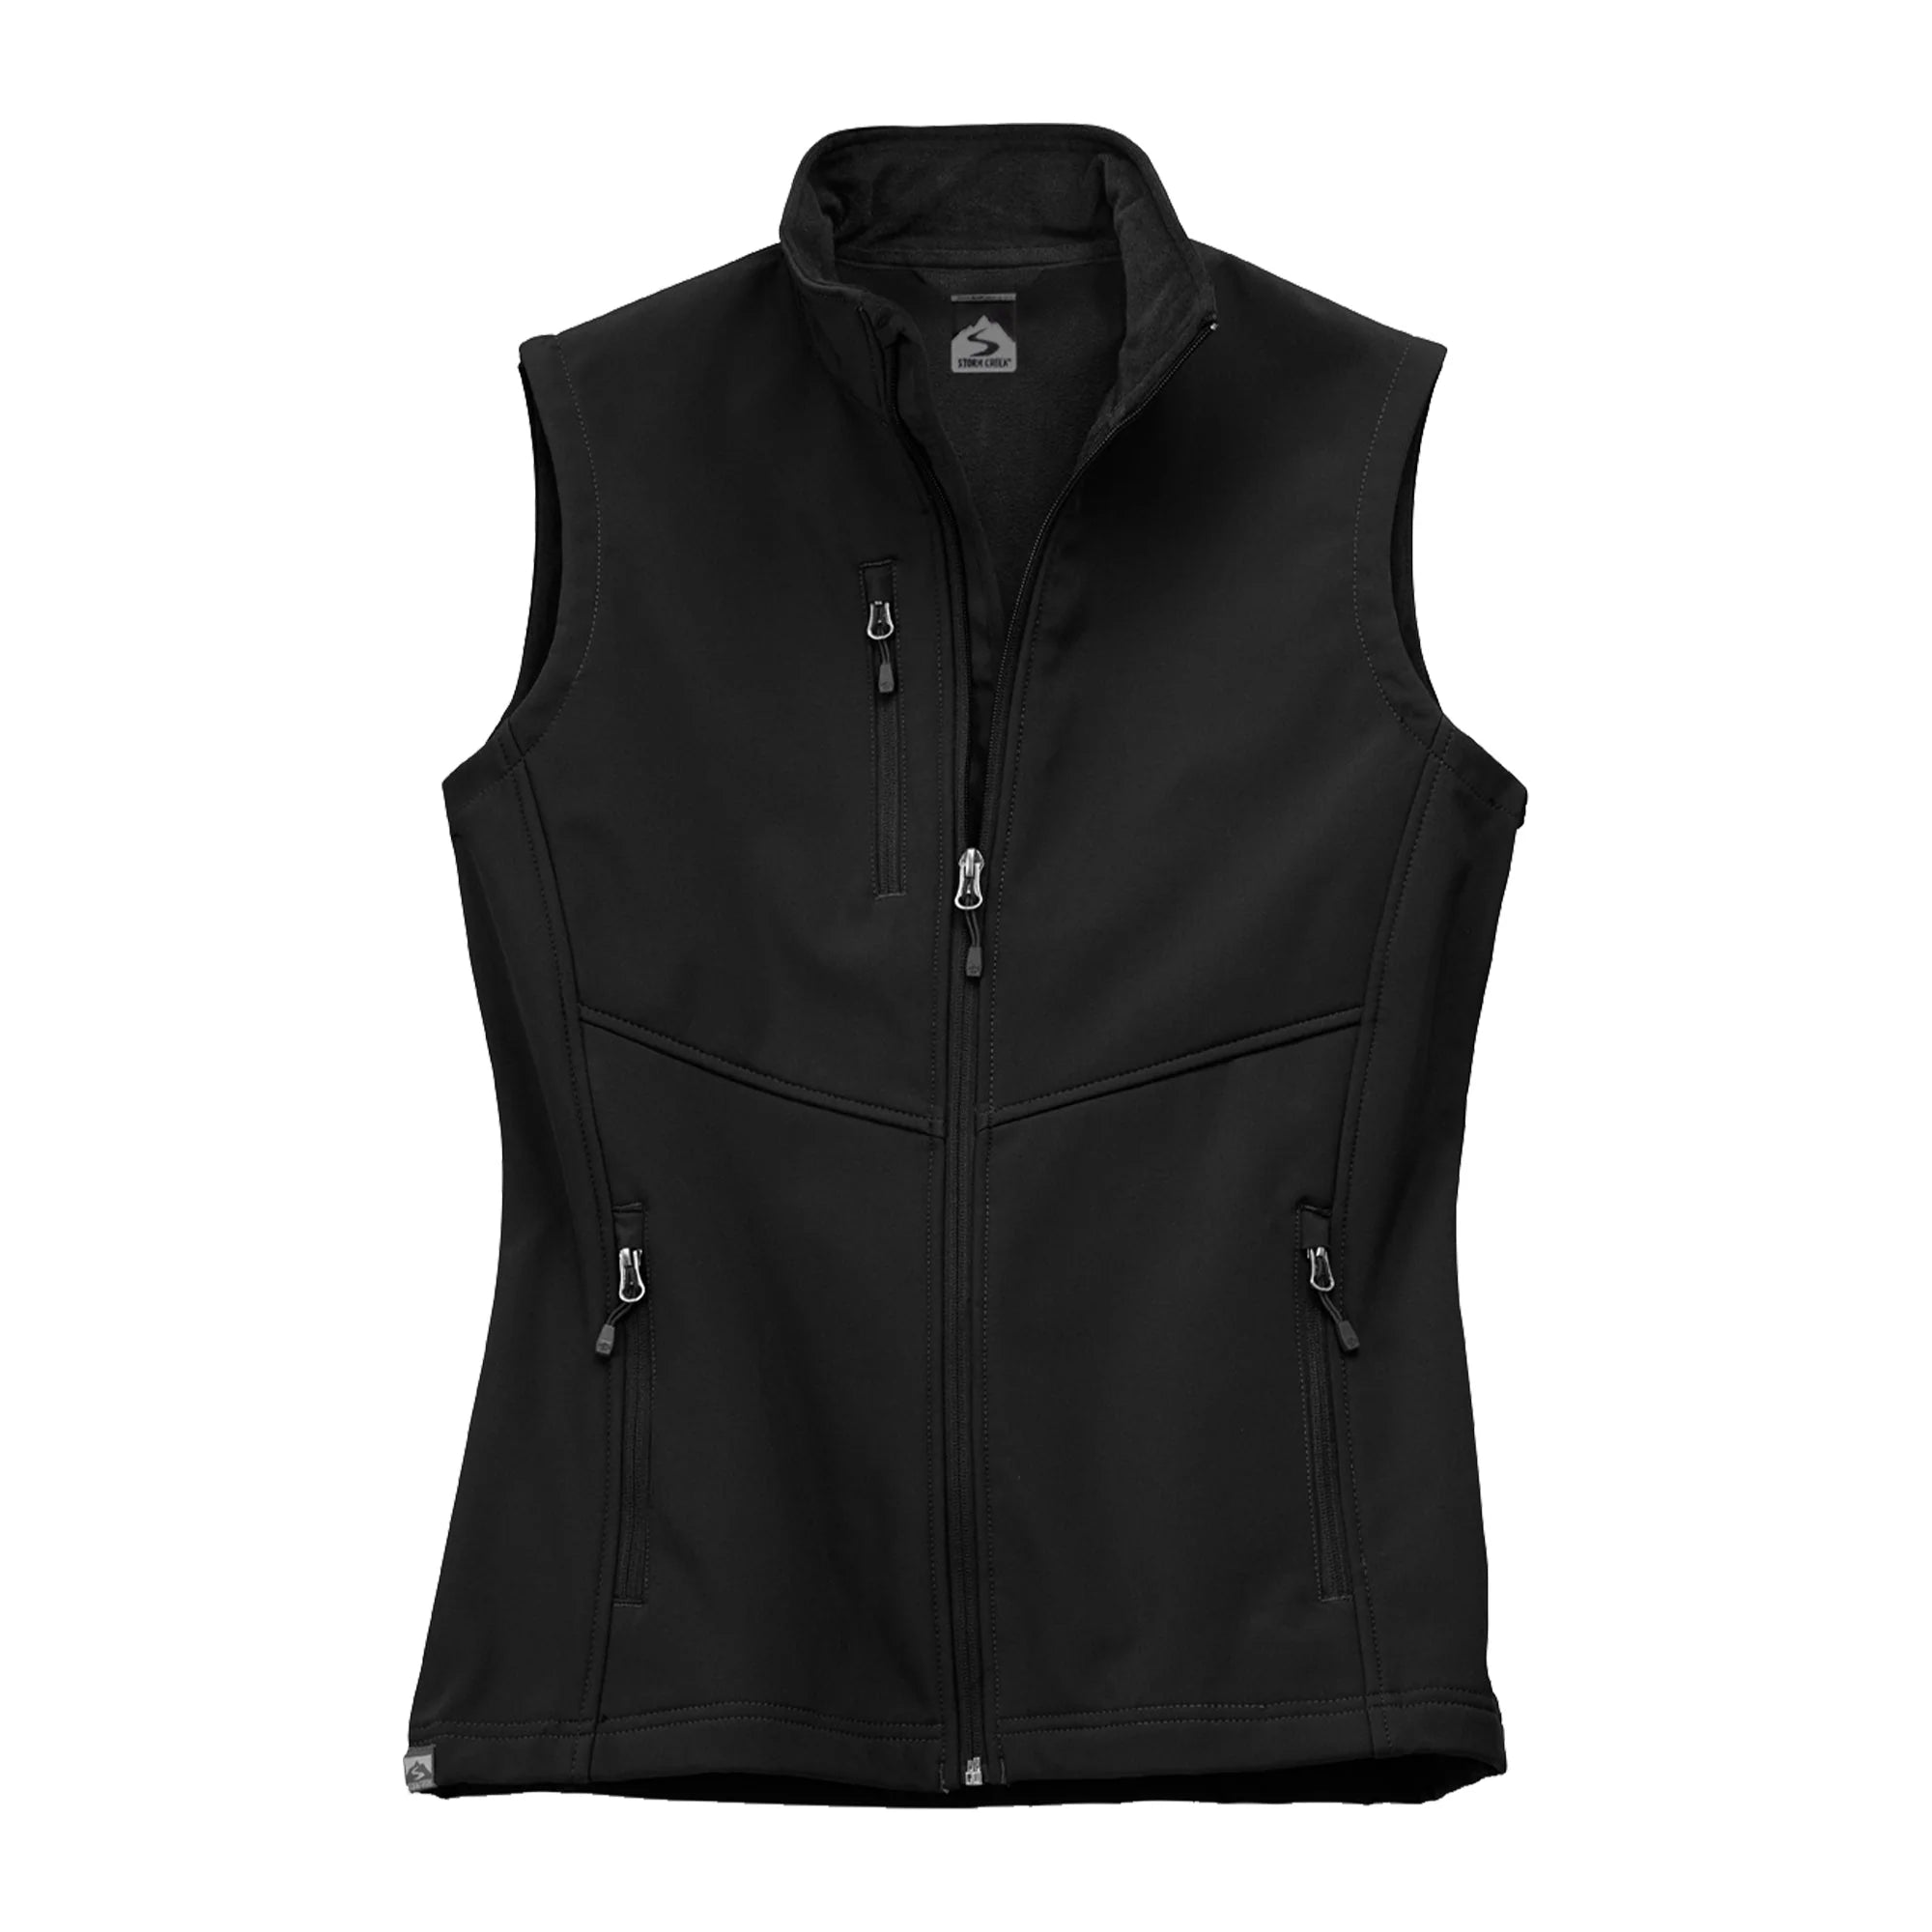 Customizable Storm Creek women's Trailblazer recycled polyester jacket in black.